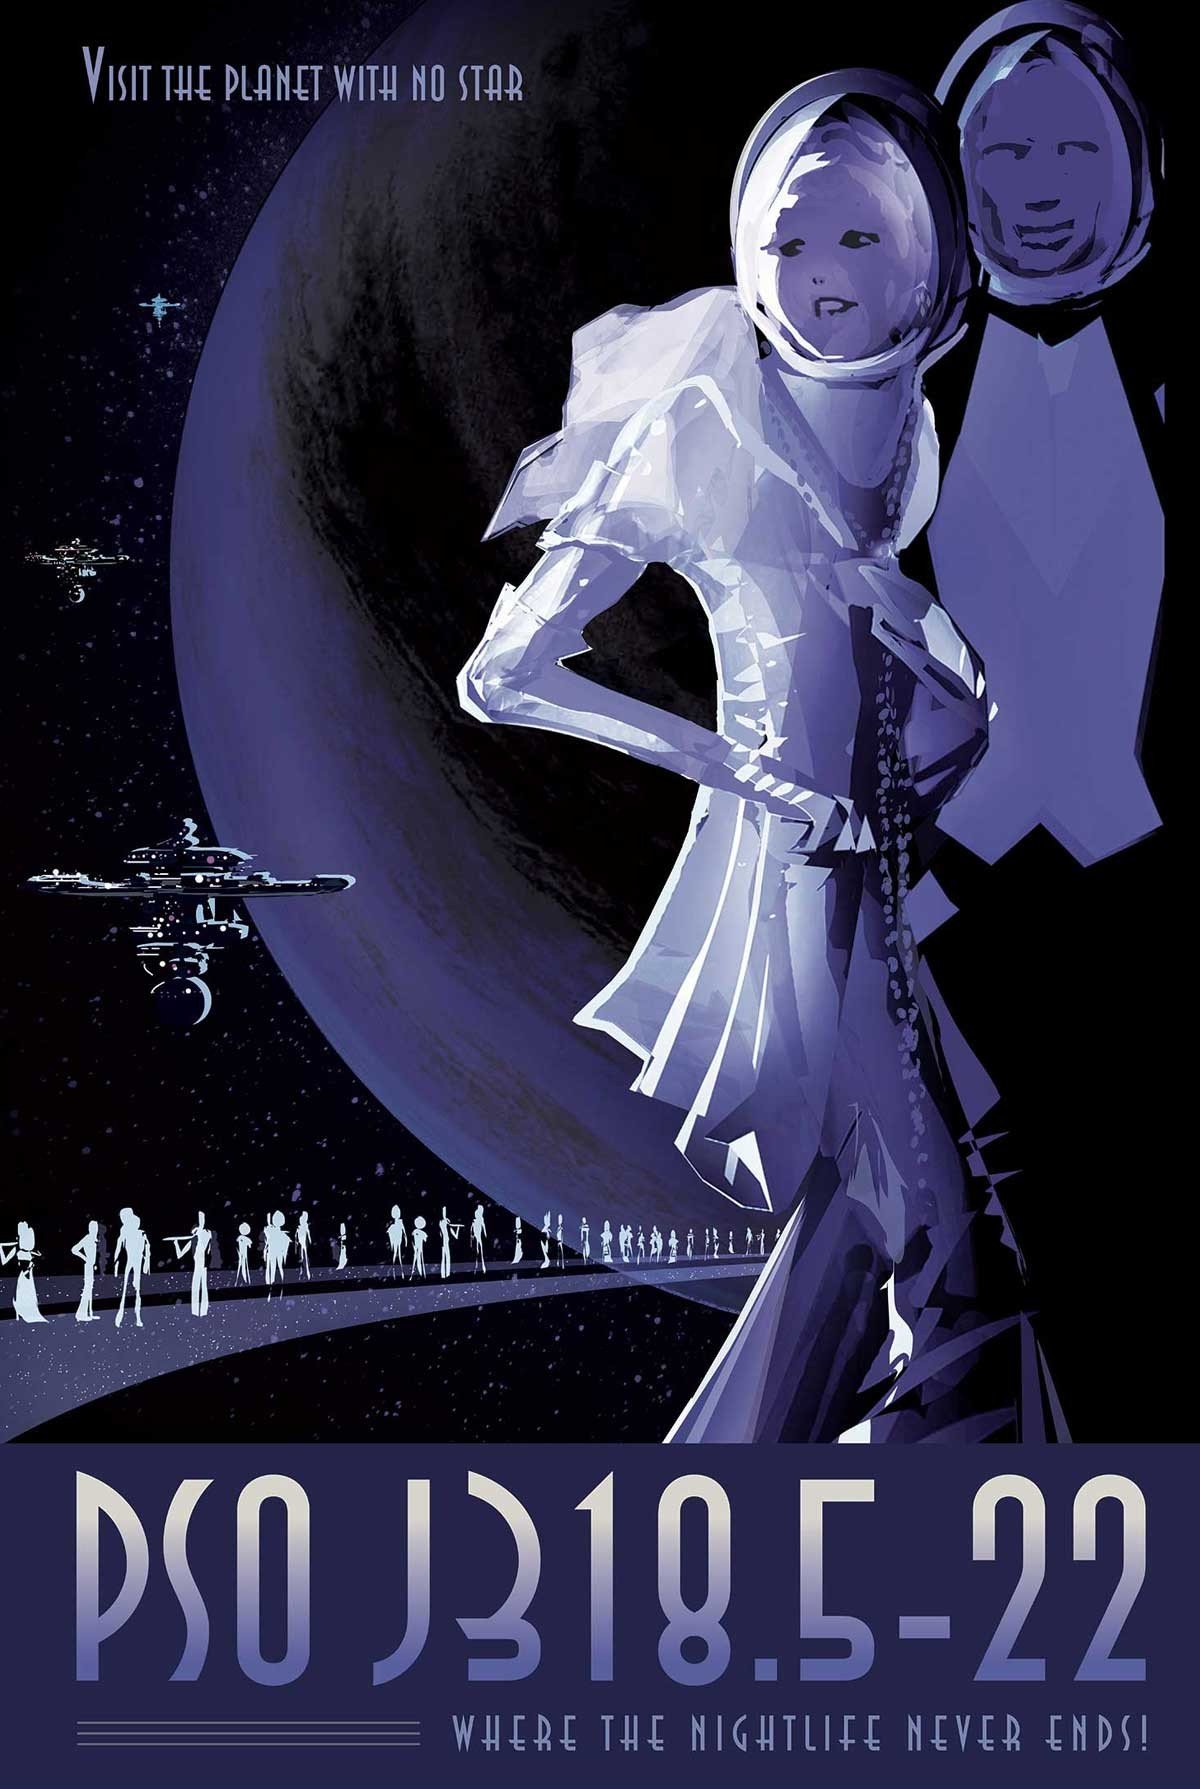 space, Planet, Travel posters, NASA, Science fiction, JPL (Jet Propulsion Laboratory) Wallpaper